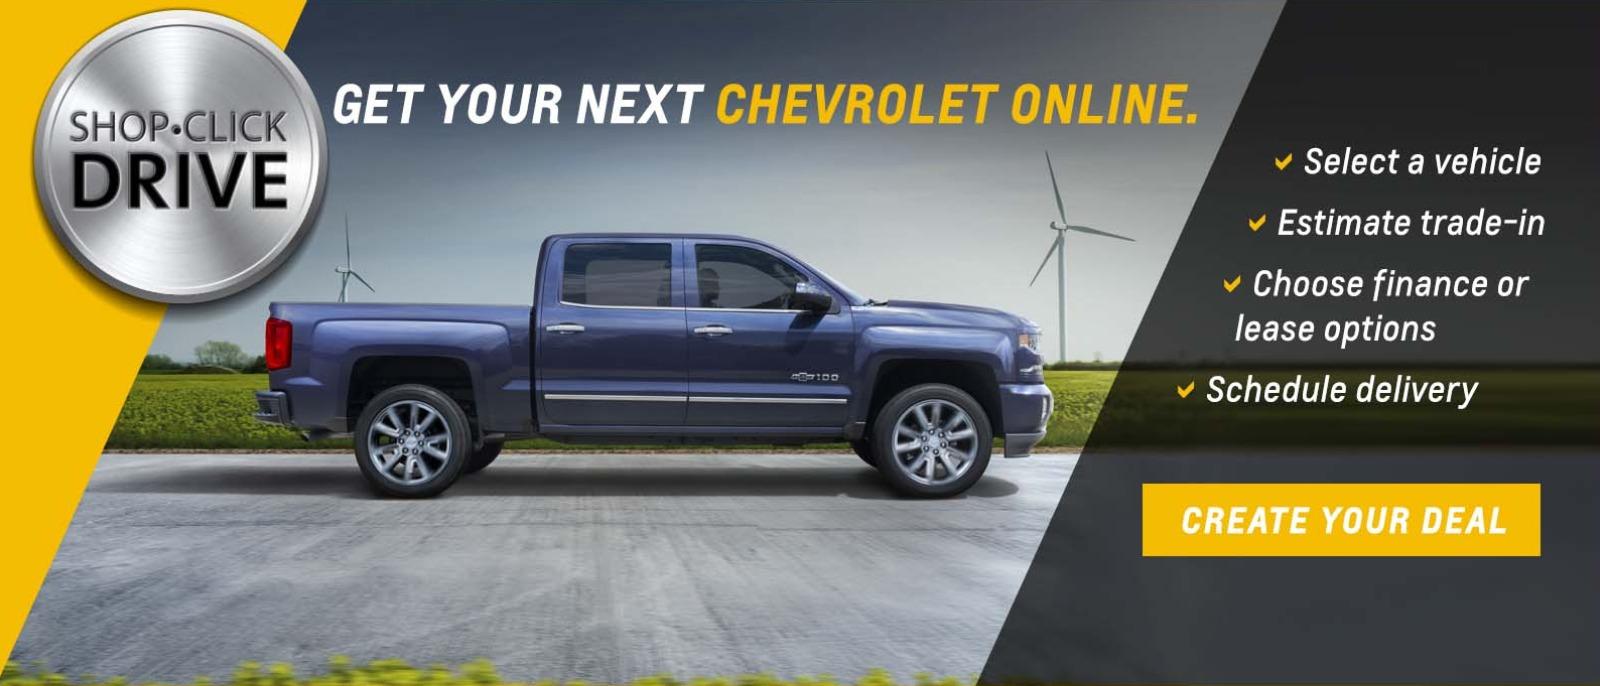 Get your next Chevrolet Online.